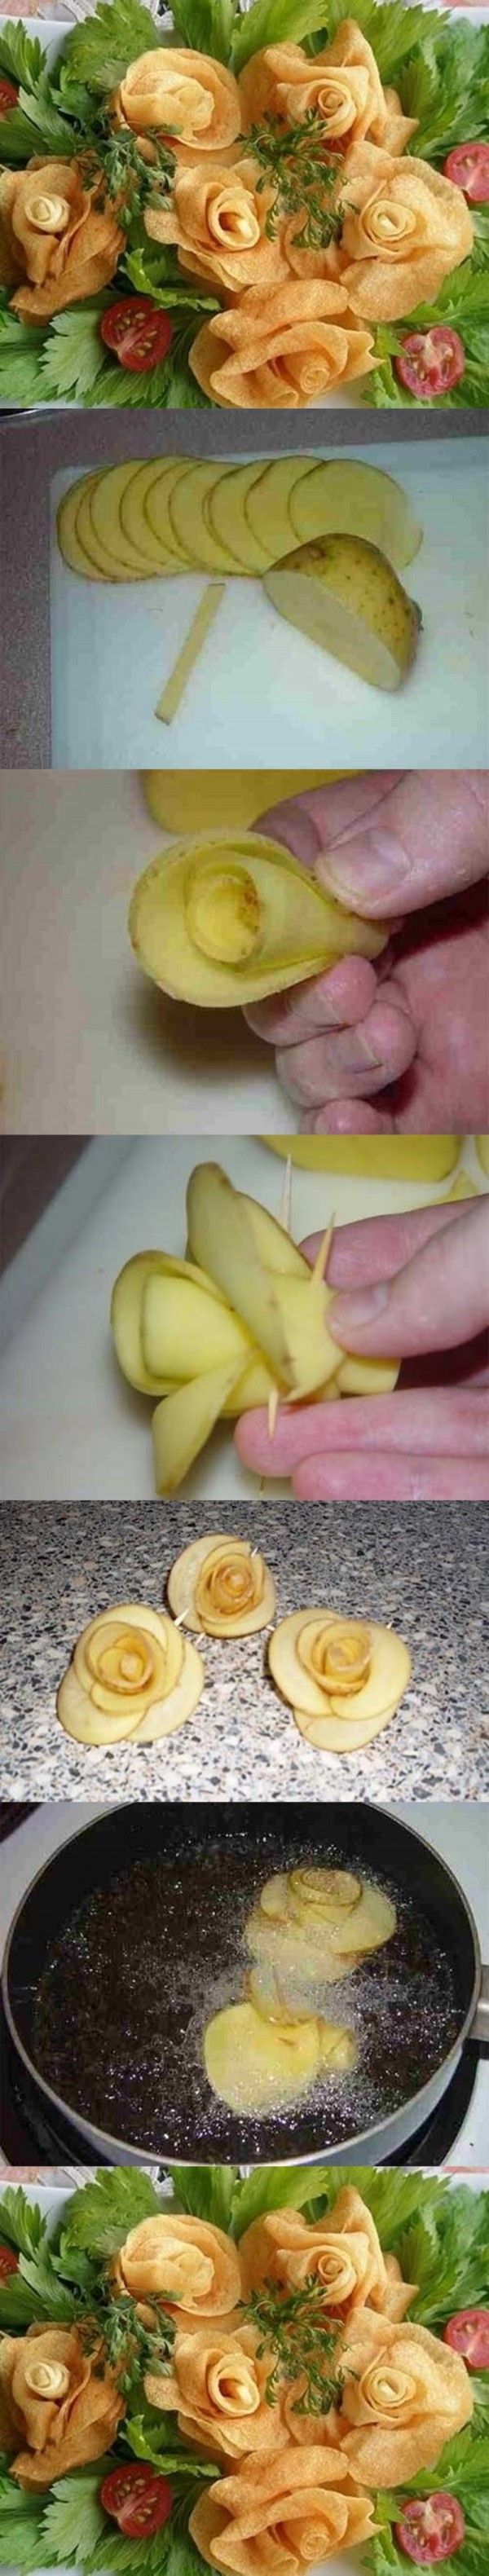 DIY potato rose fry tutorial